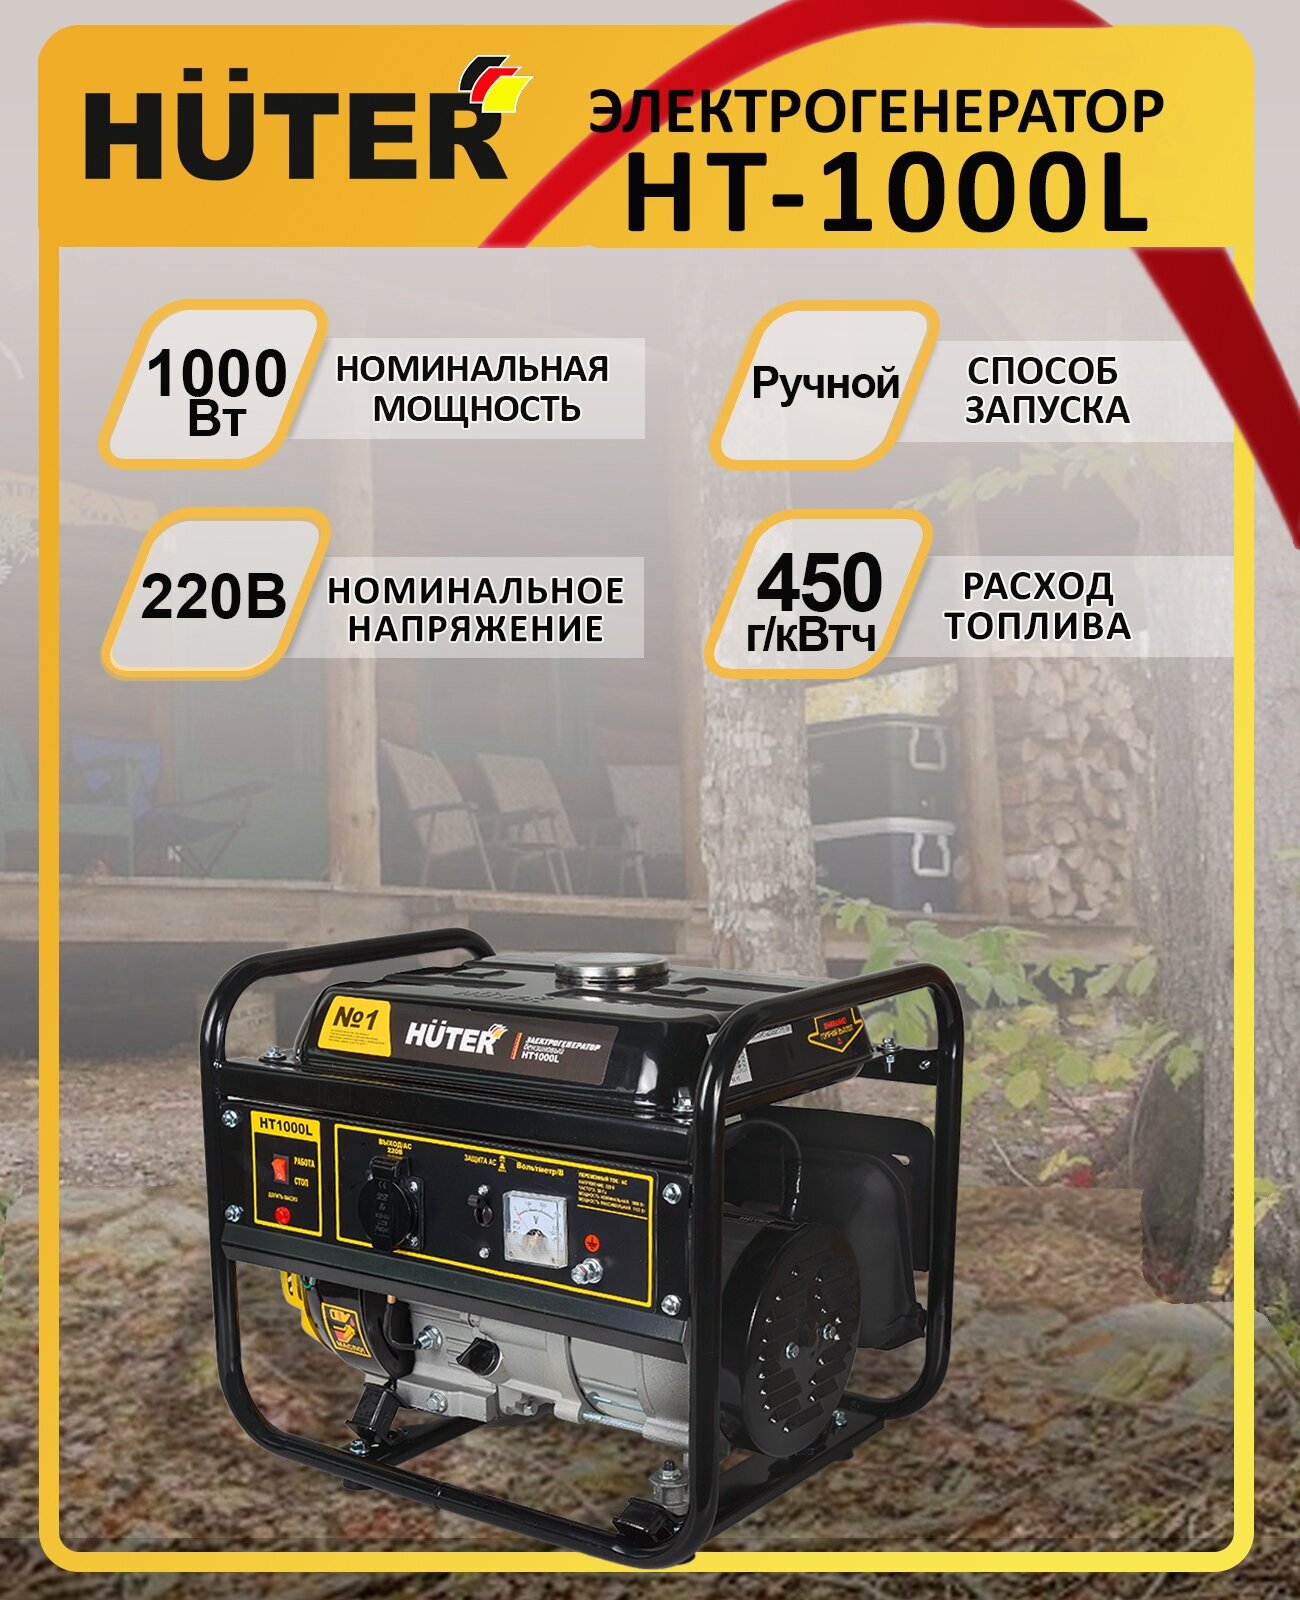 Электрогенератор HT1000L Huter - 4х тактный, 1000Вт (max 1100Вт)